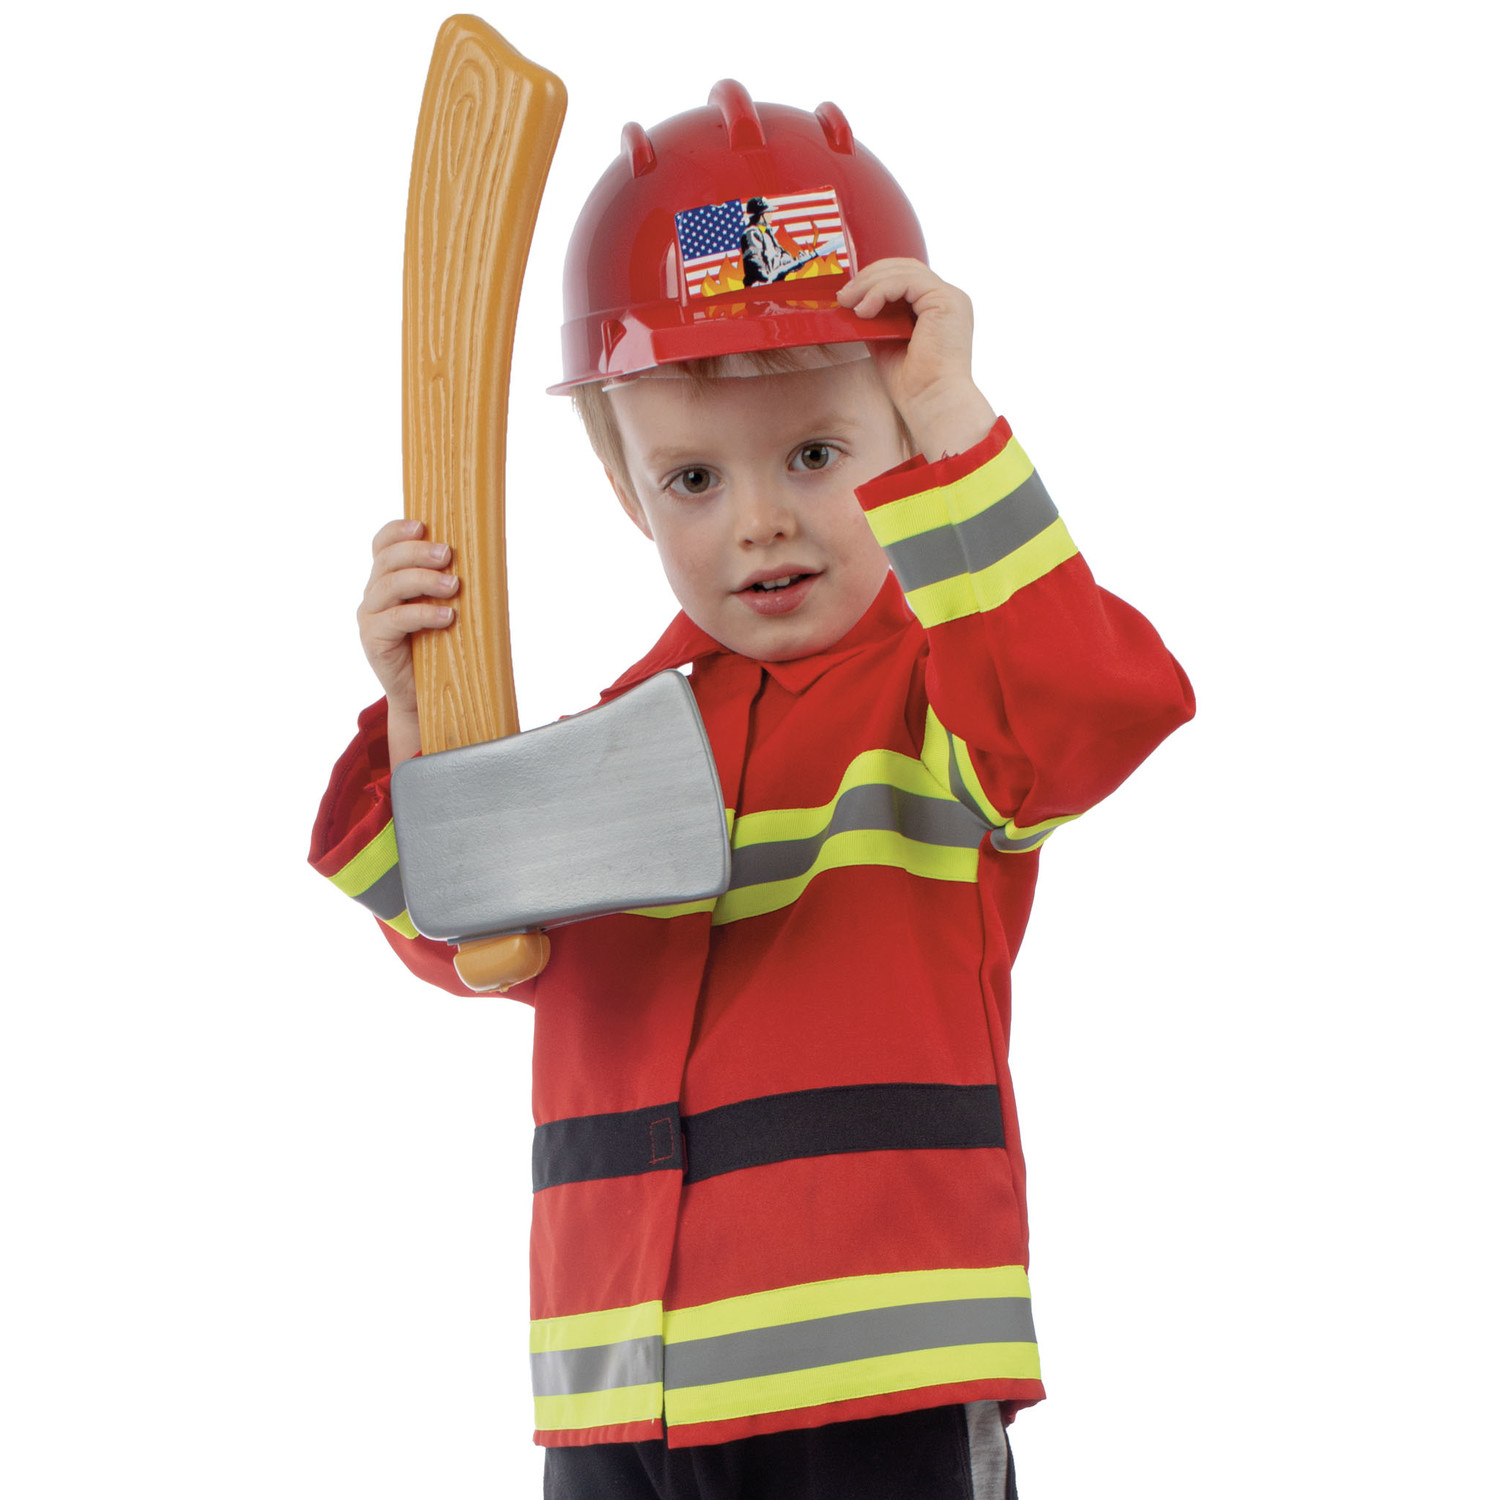 vergeetachtig Gooey huiswerk maken Mooi brandweerman pak Daan - e-Carnavalskleding